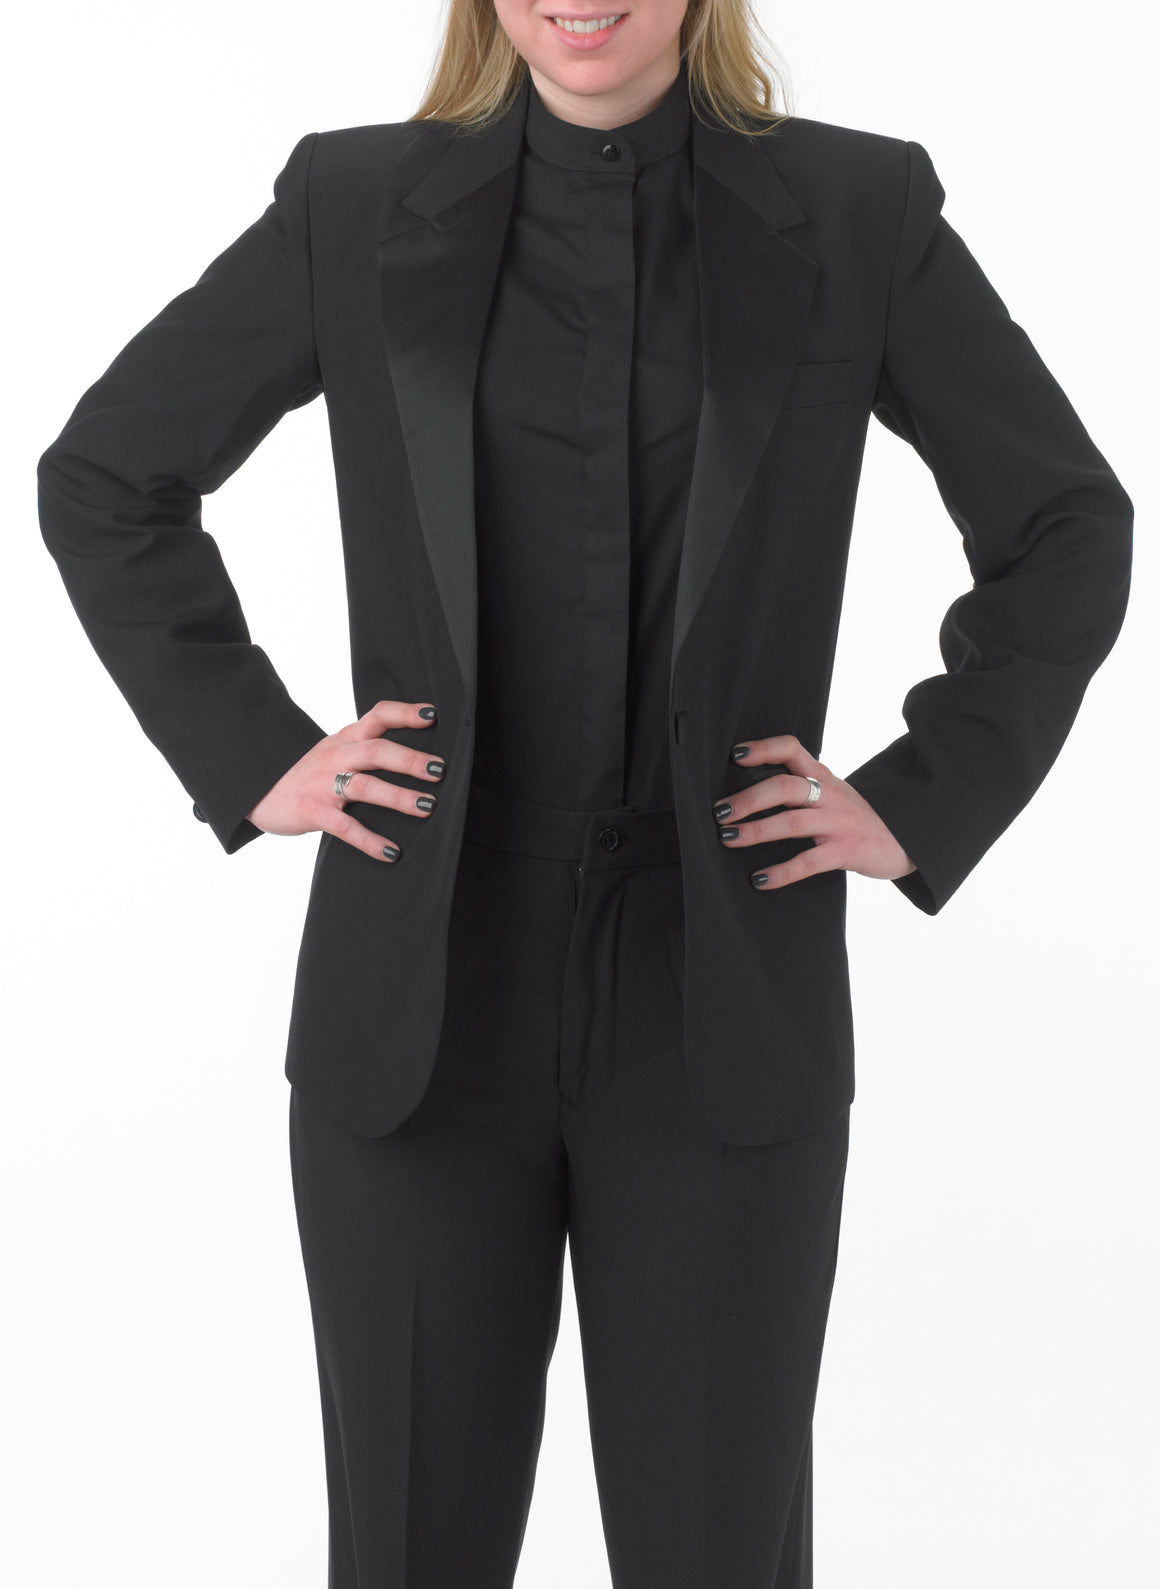 White Women's Suits Black Shawl Lapel Ladies Jacket Formal Business Party  Blazer